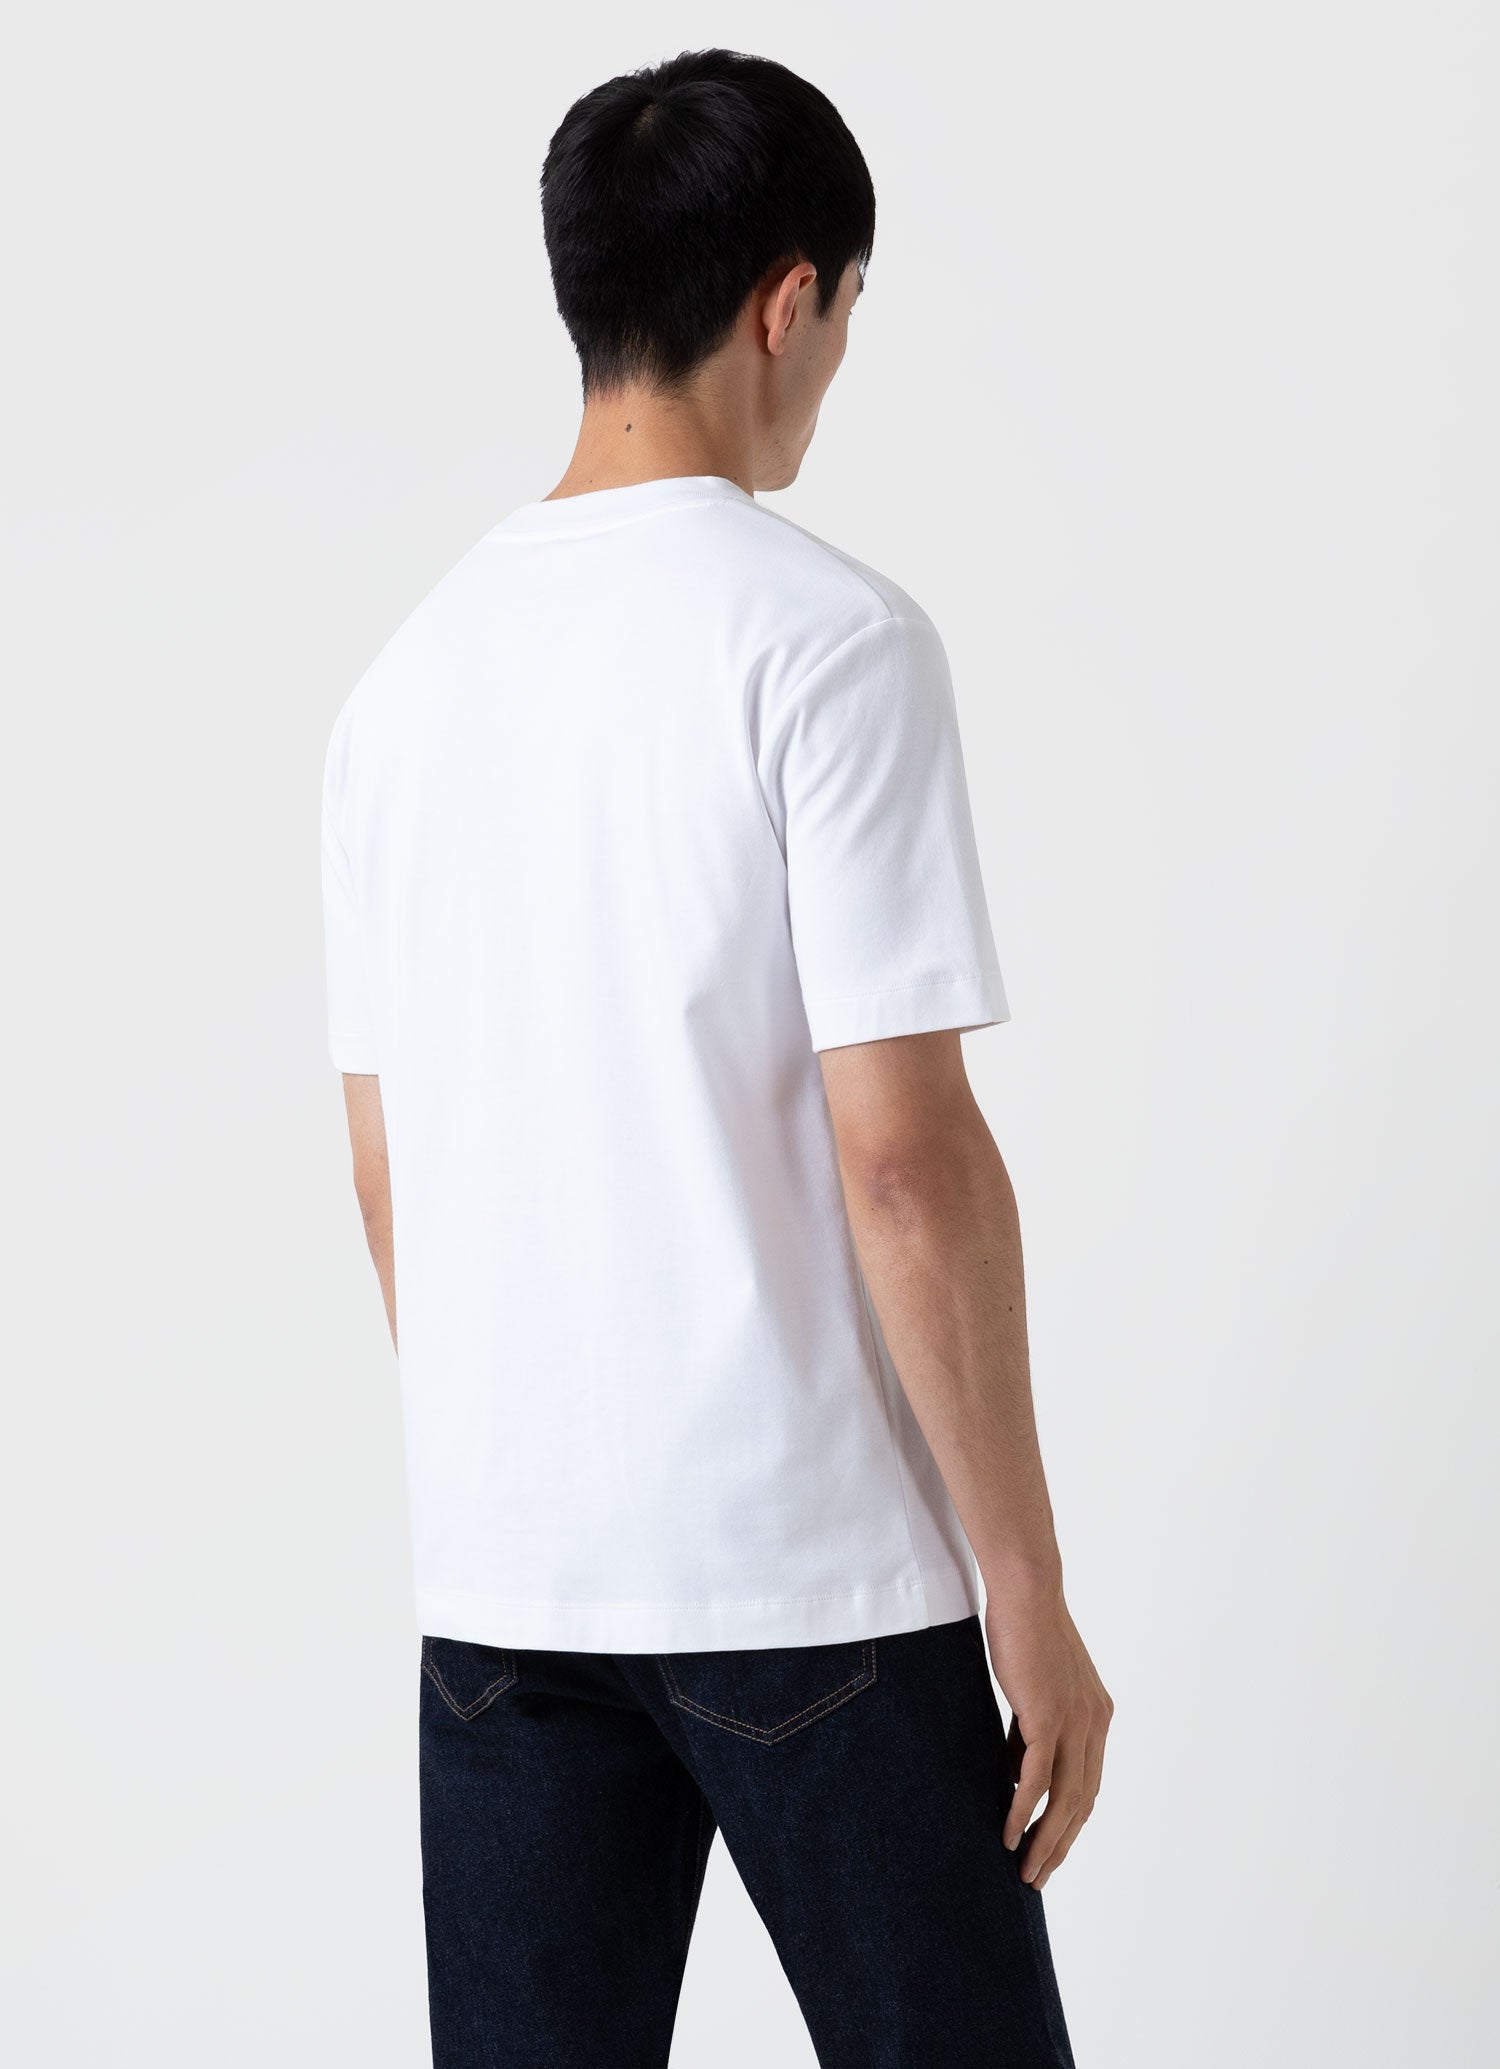 Men's Mock Neck Heavyweight T-shirt in White | Sunspel